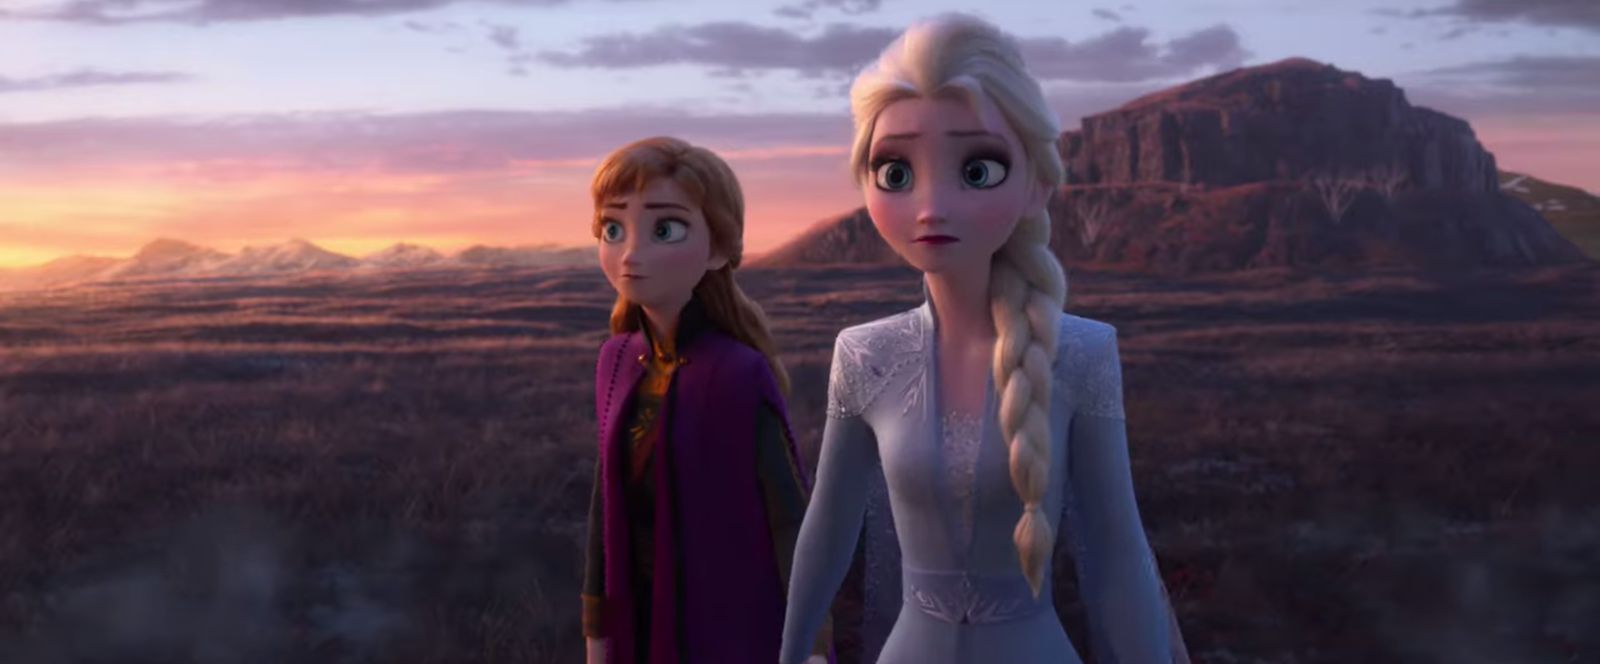 Disney ‘Frozen’ 2 Confirms Elsa and Anna’s Mom Voiced By Evan Rachel Woods